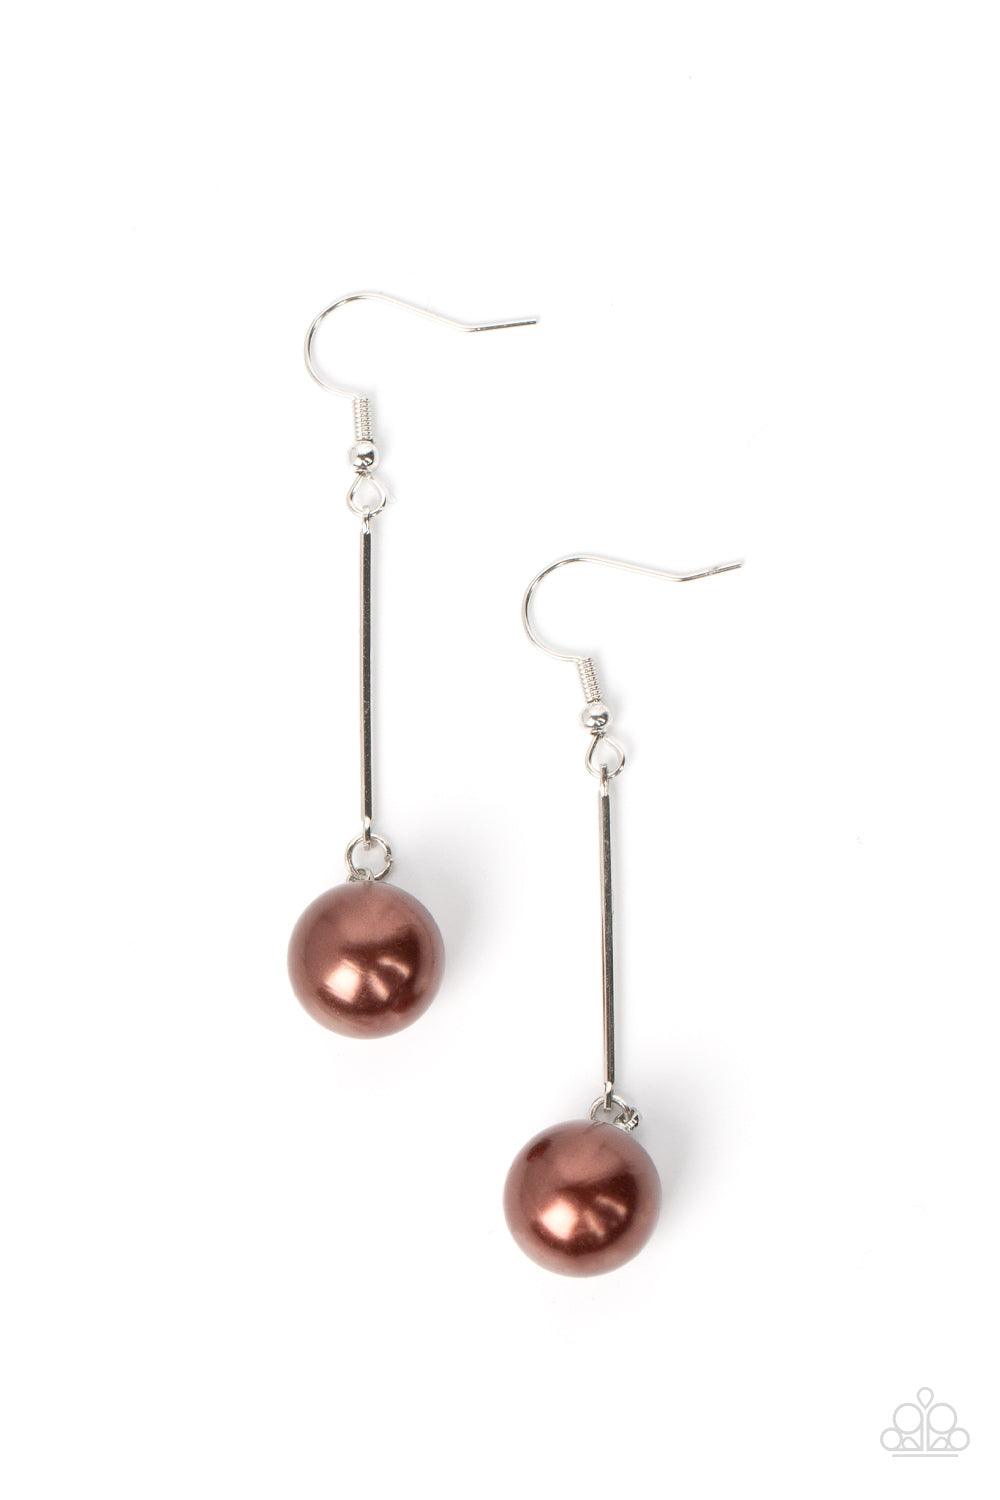 Paparazzi Accessories - Pearl Redux - Brown Earrings - Bling by JessieK